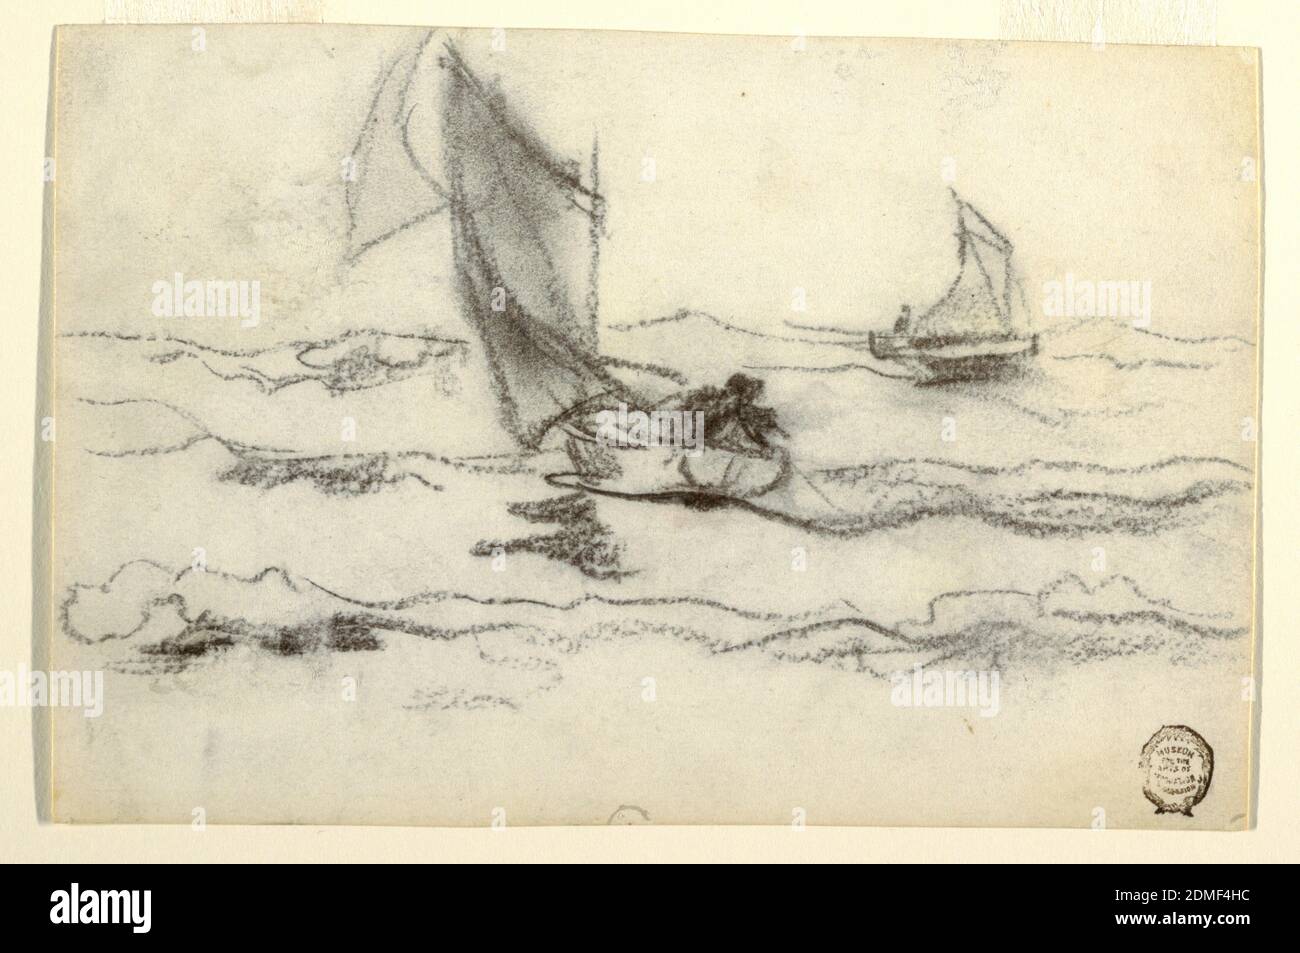 Sailing (Original Line Art, Pencil charcoal watercolour on paper